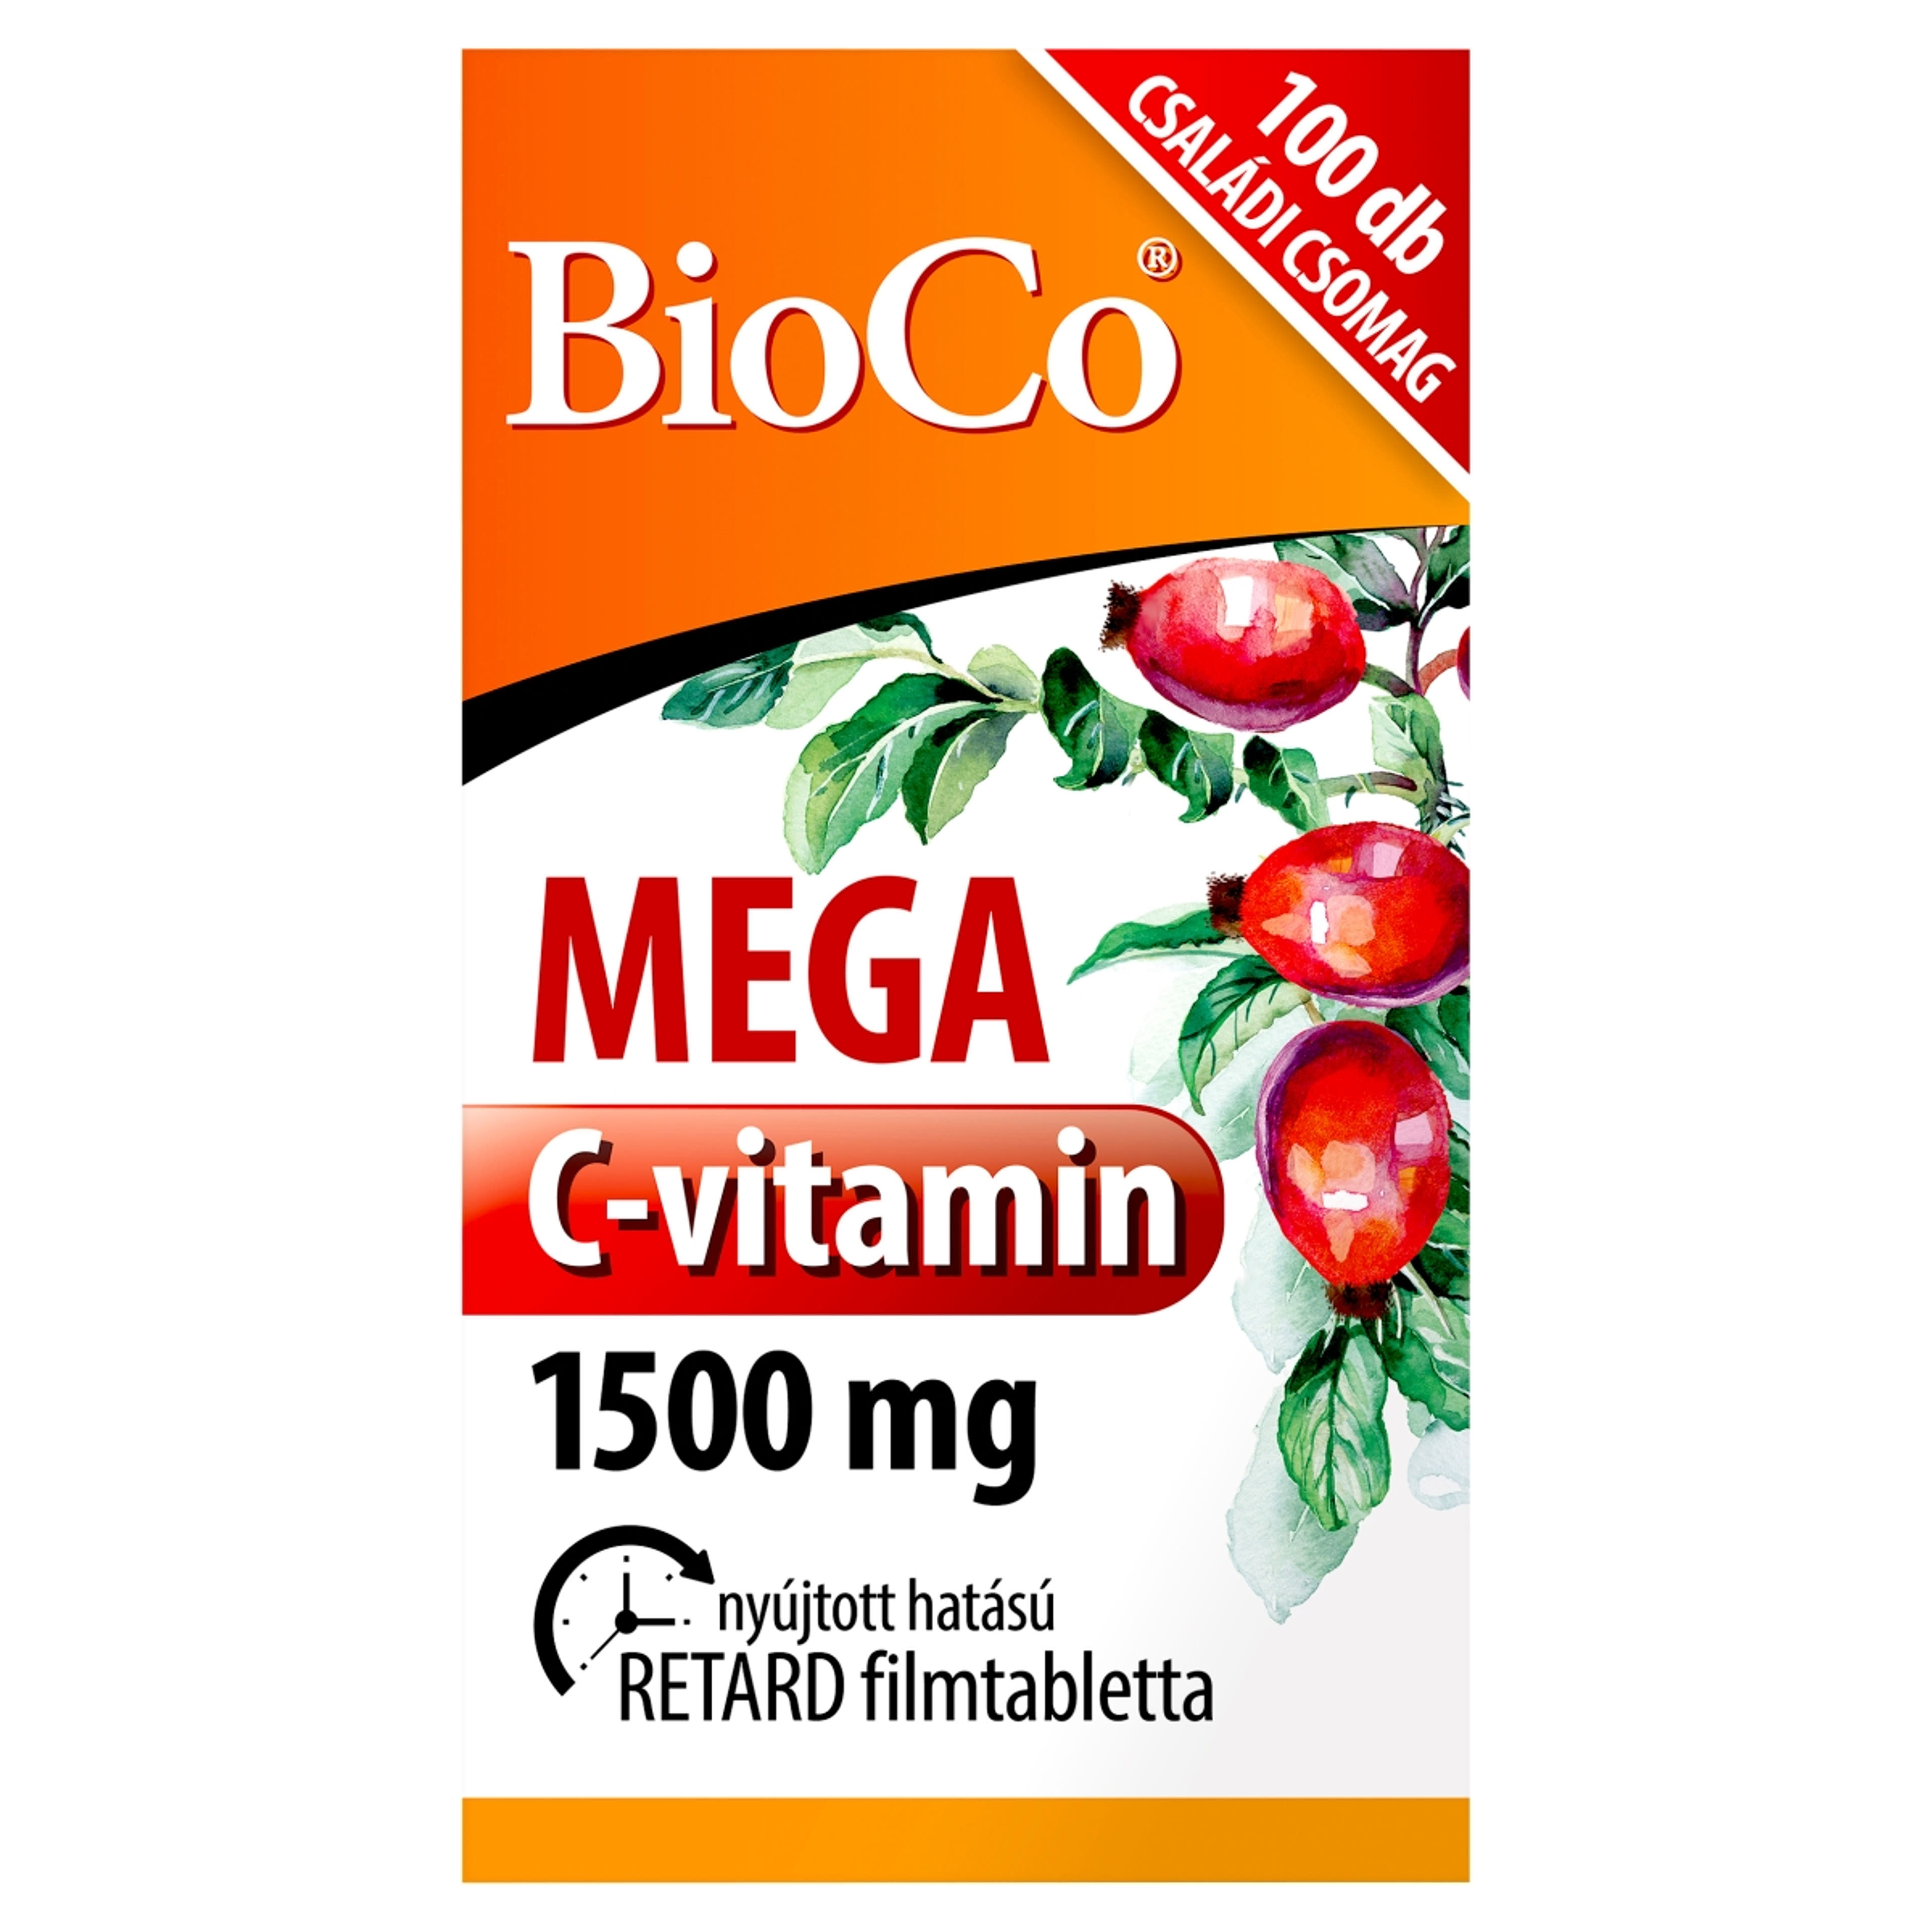 Bioco Mega C-vitamin étrendkiegészítő tabletta - 100 db